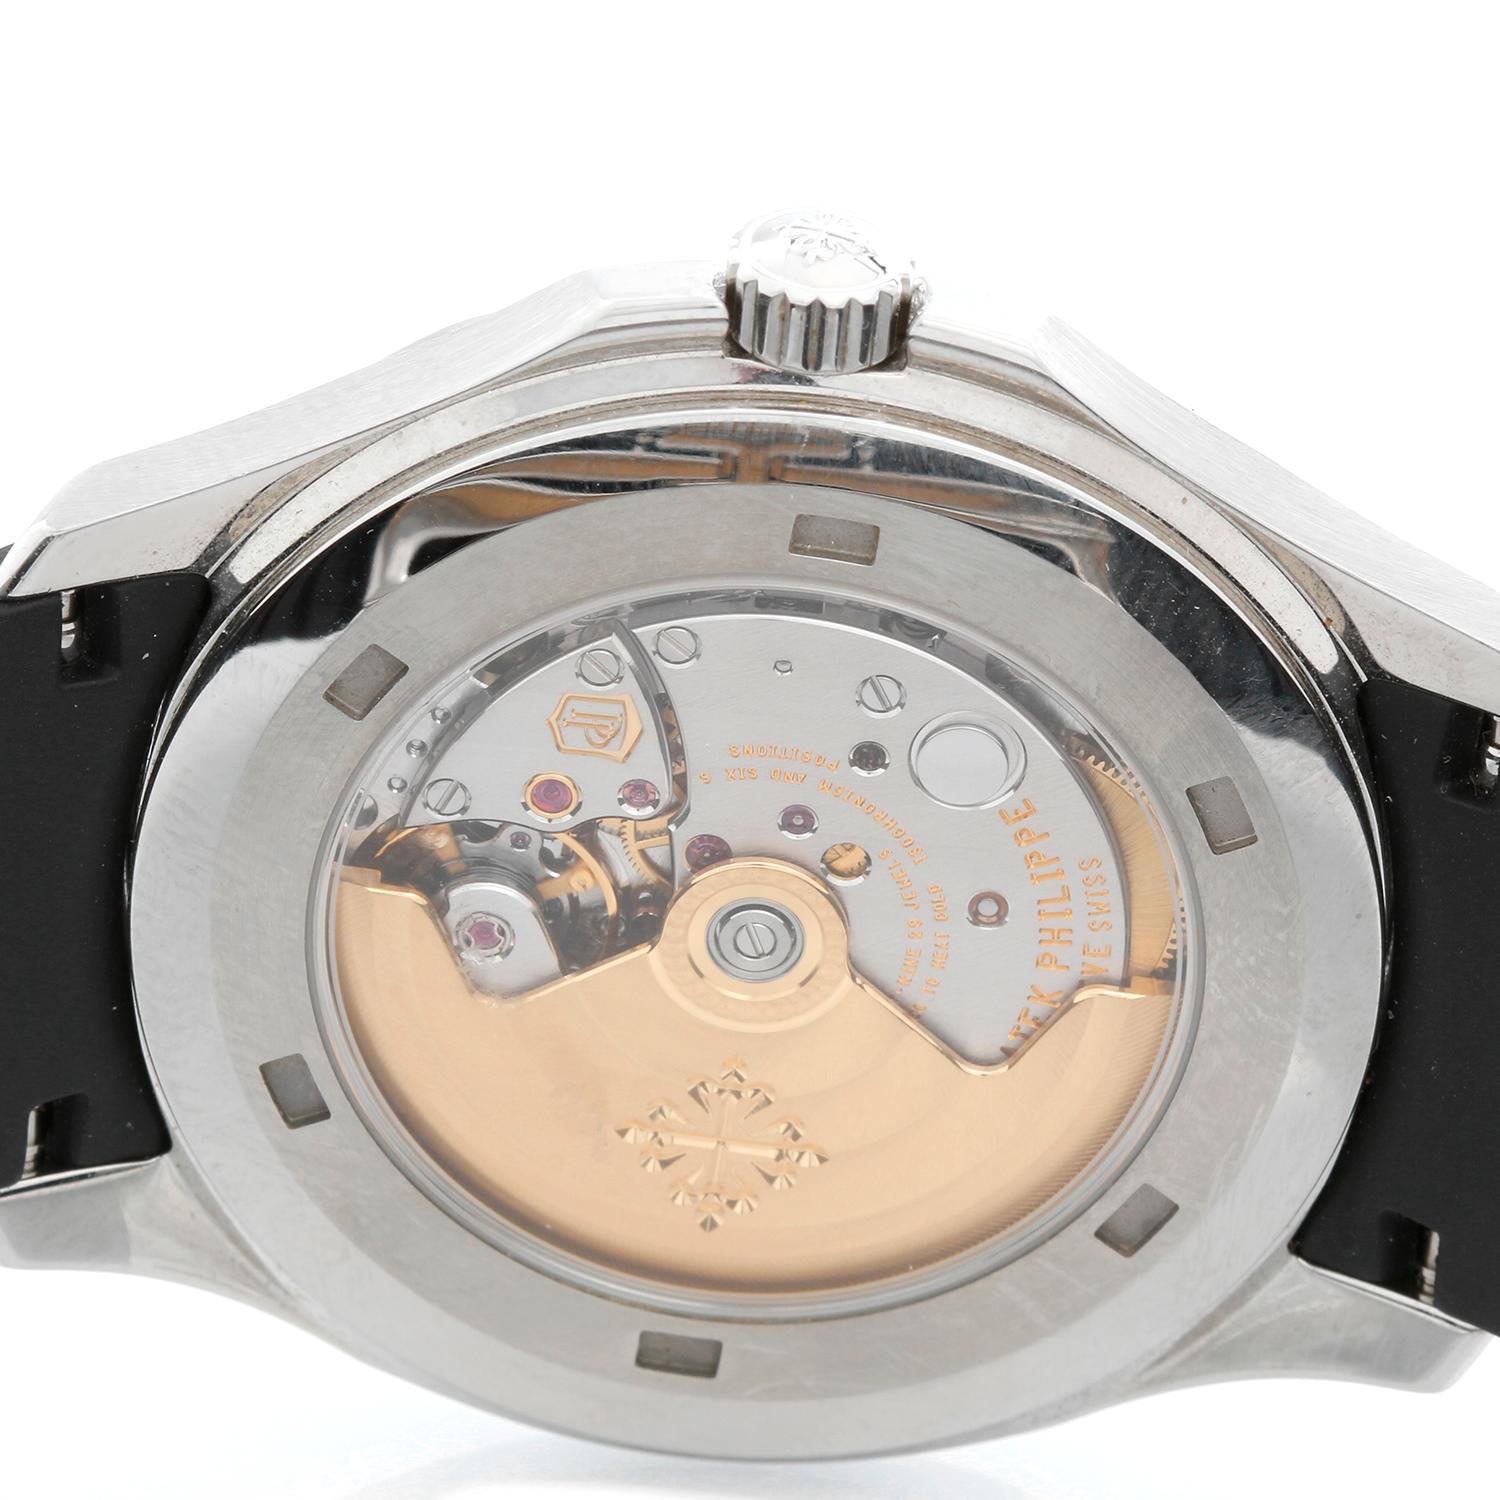 Patek Philippe Aquanaut Men's Stainless Steel Watch 5167A - 001 2